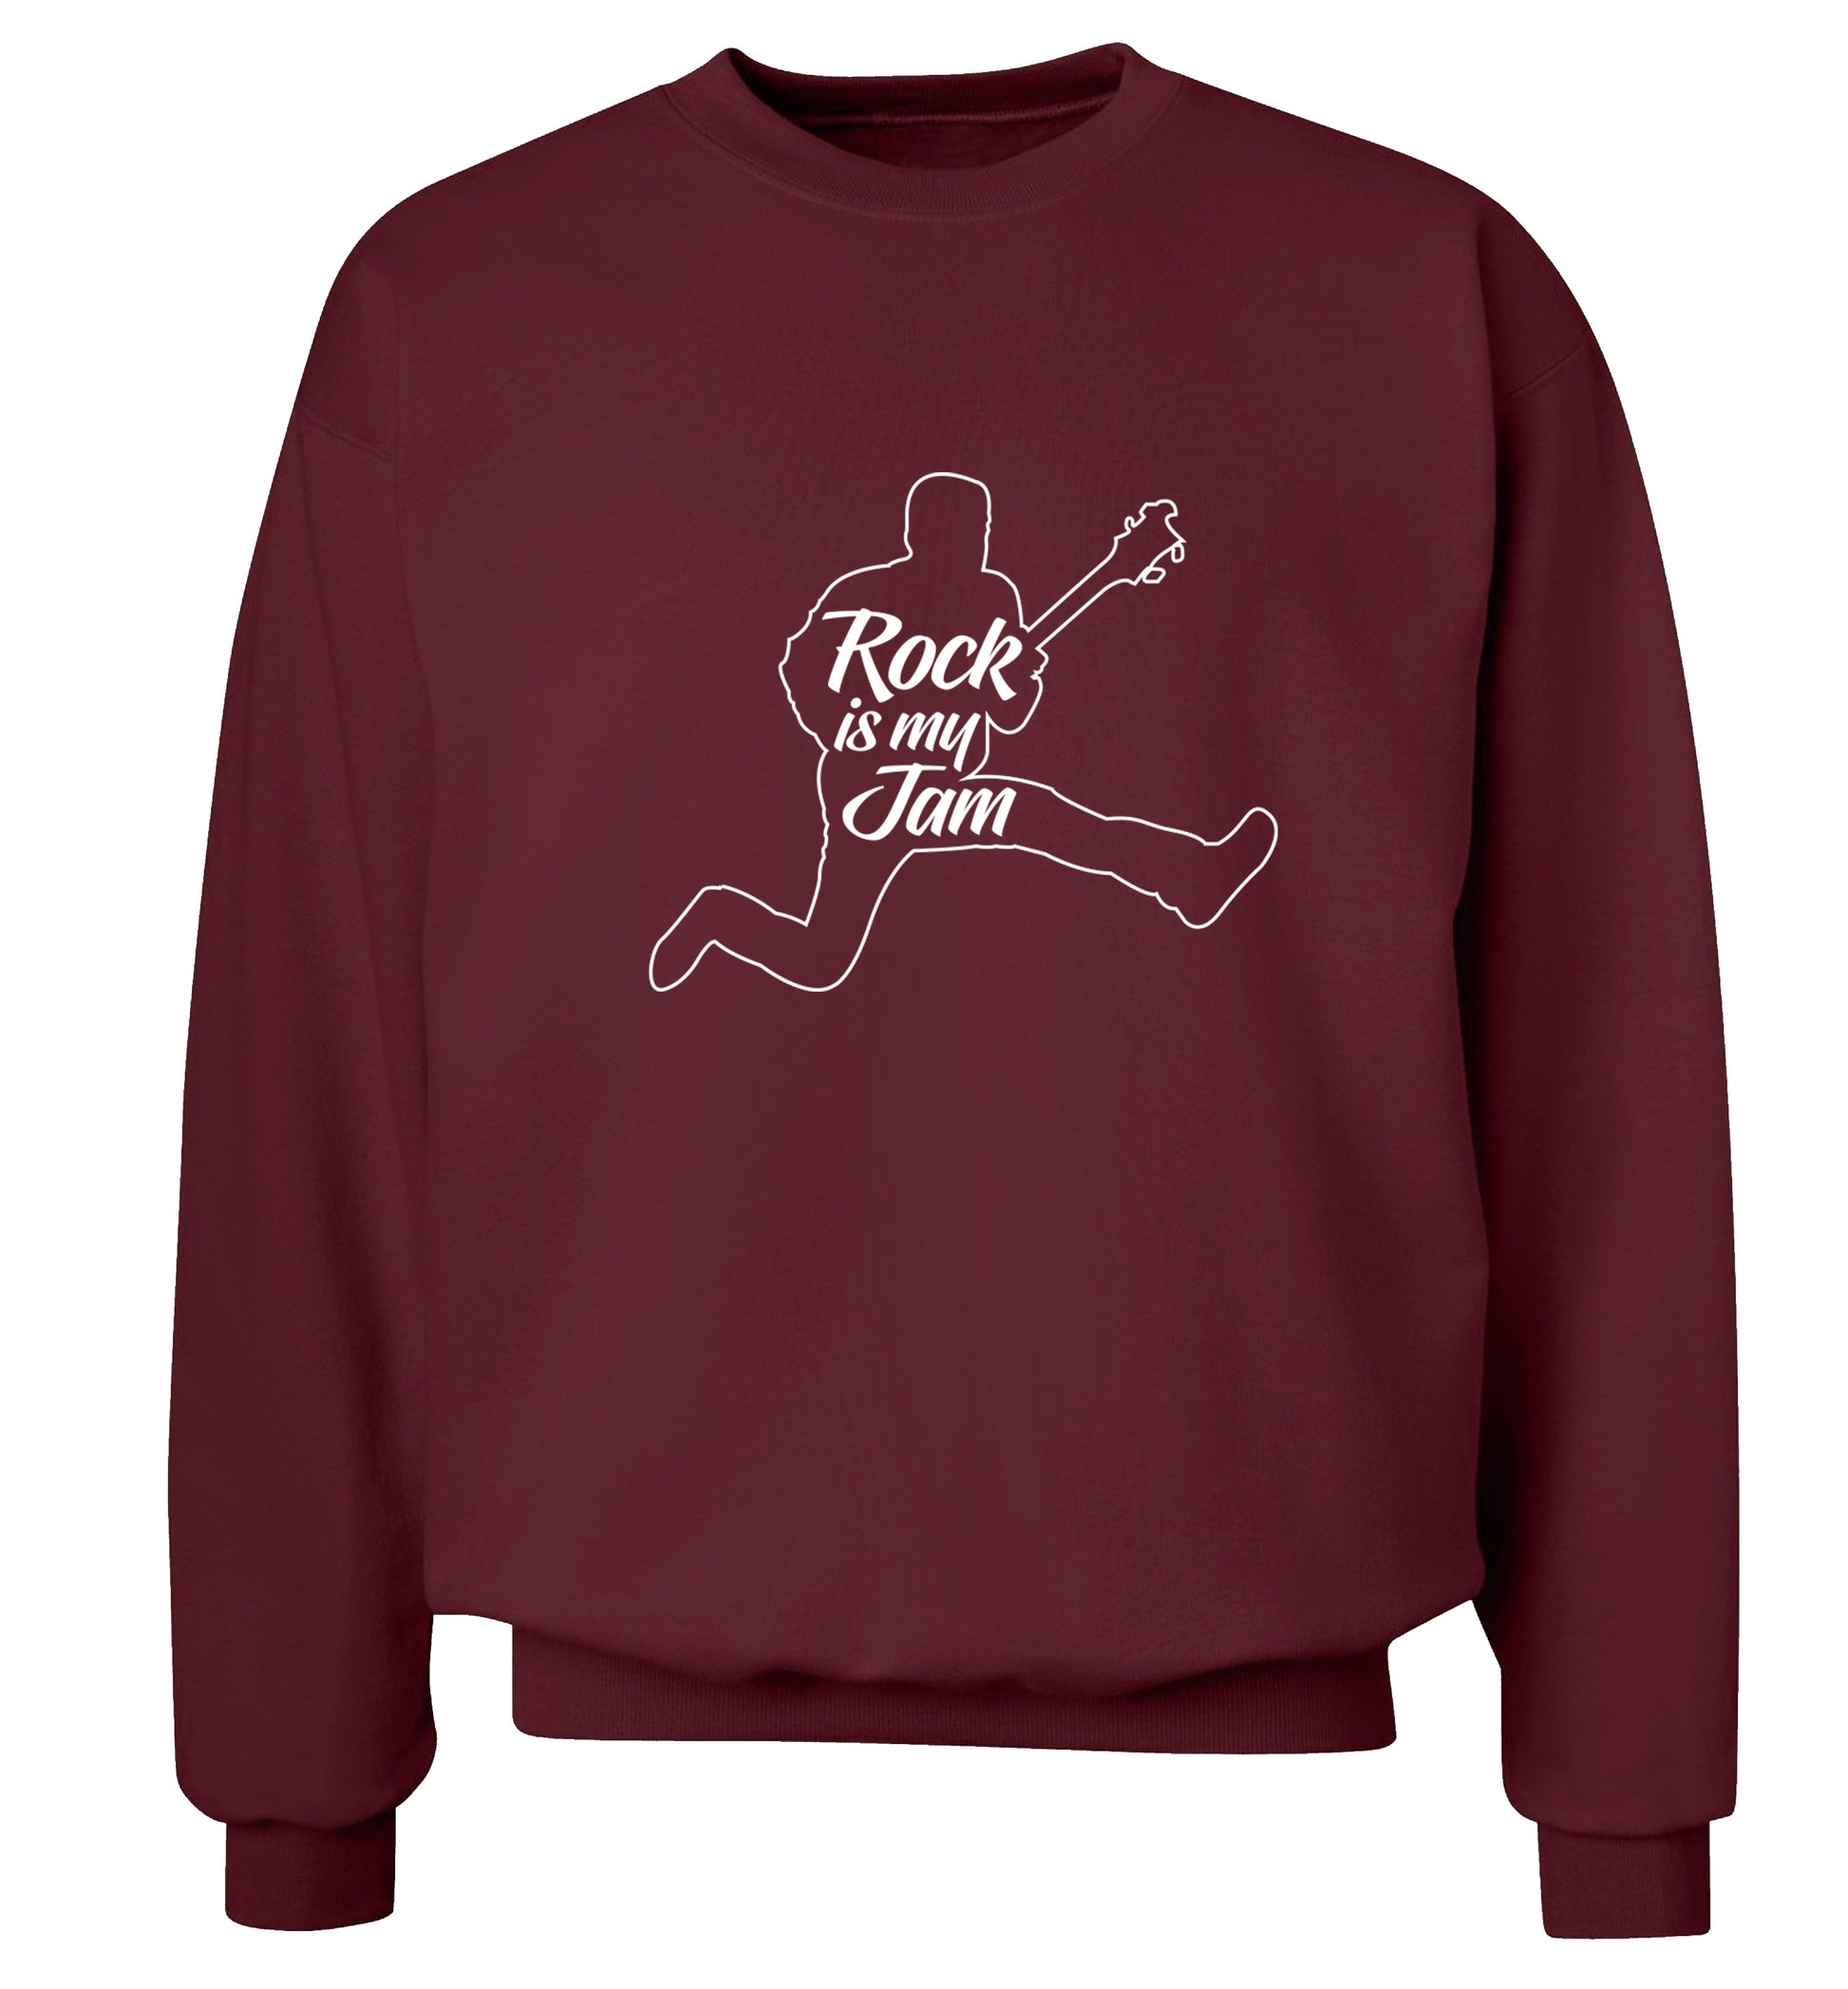 Rock is my jam Adult's unisex maroon Sweater 2XL